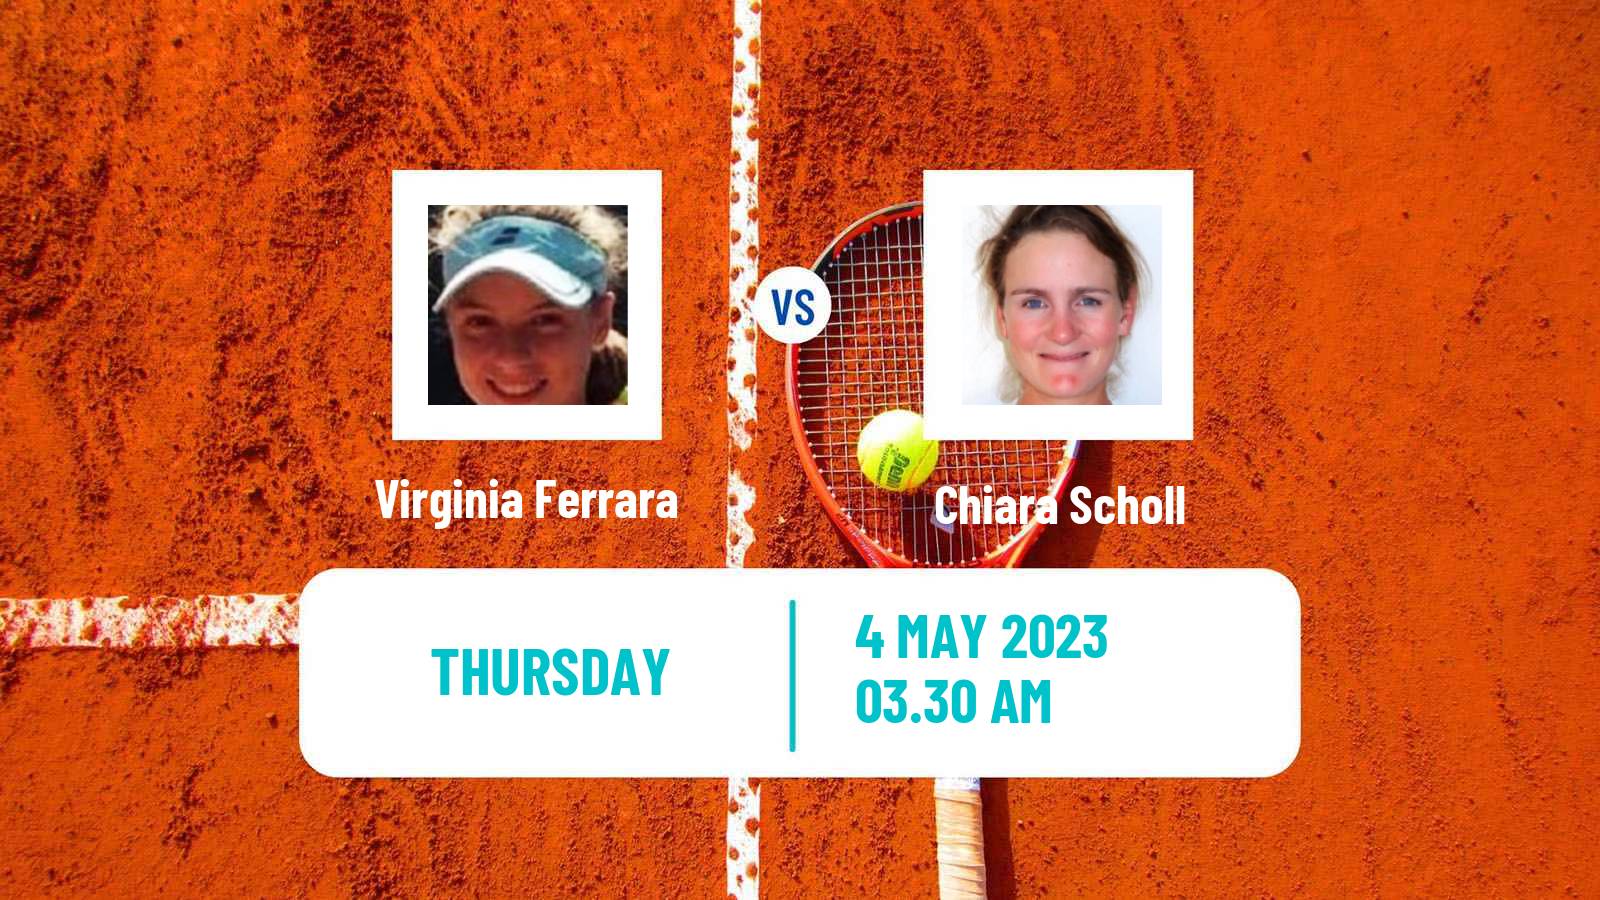 Tennis ITF Tournaments Virginia Ferrara - Chiara Scholl